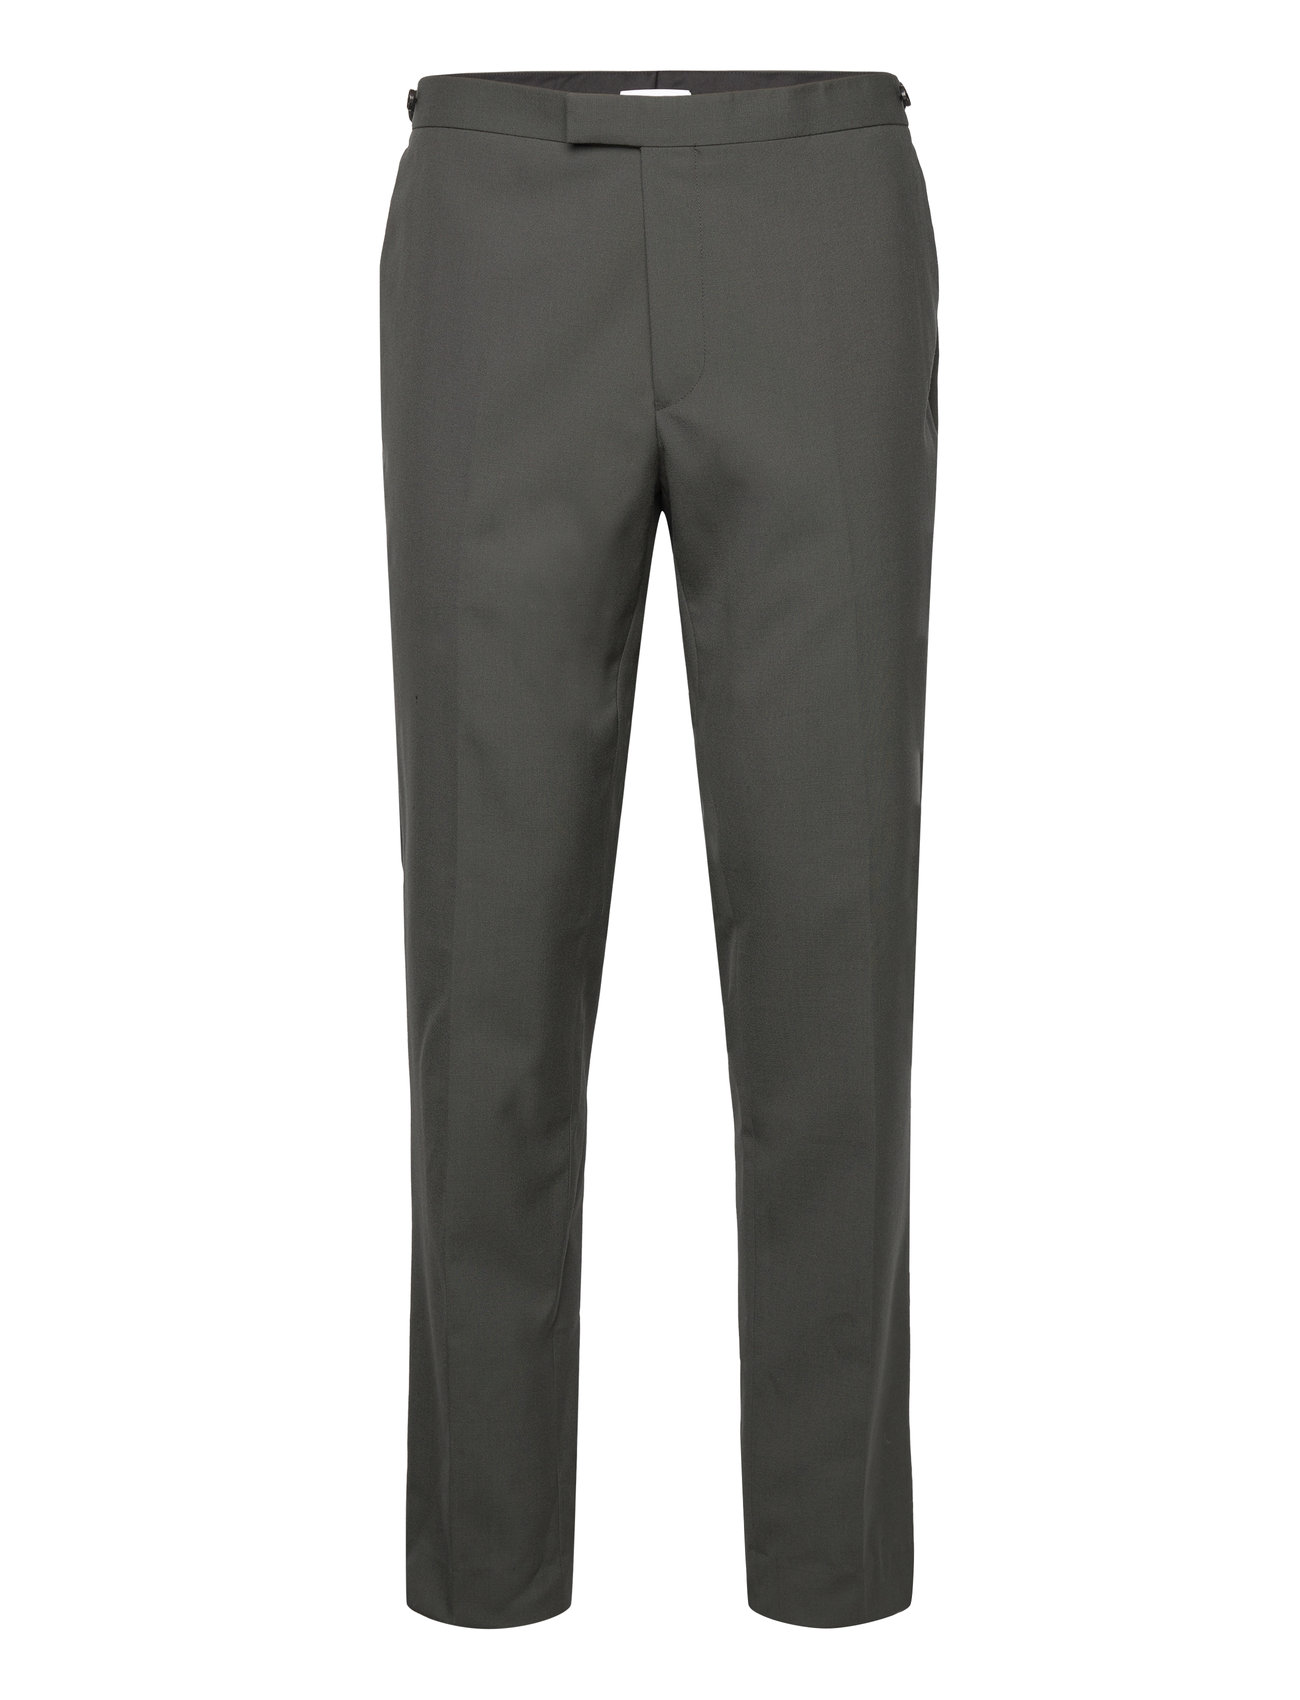 Reiss Suit Trousers in Slim Fit | ASOS